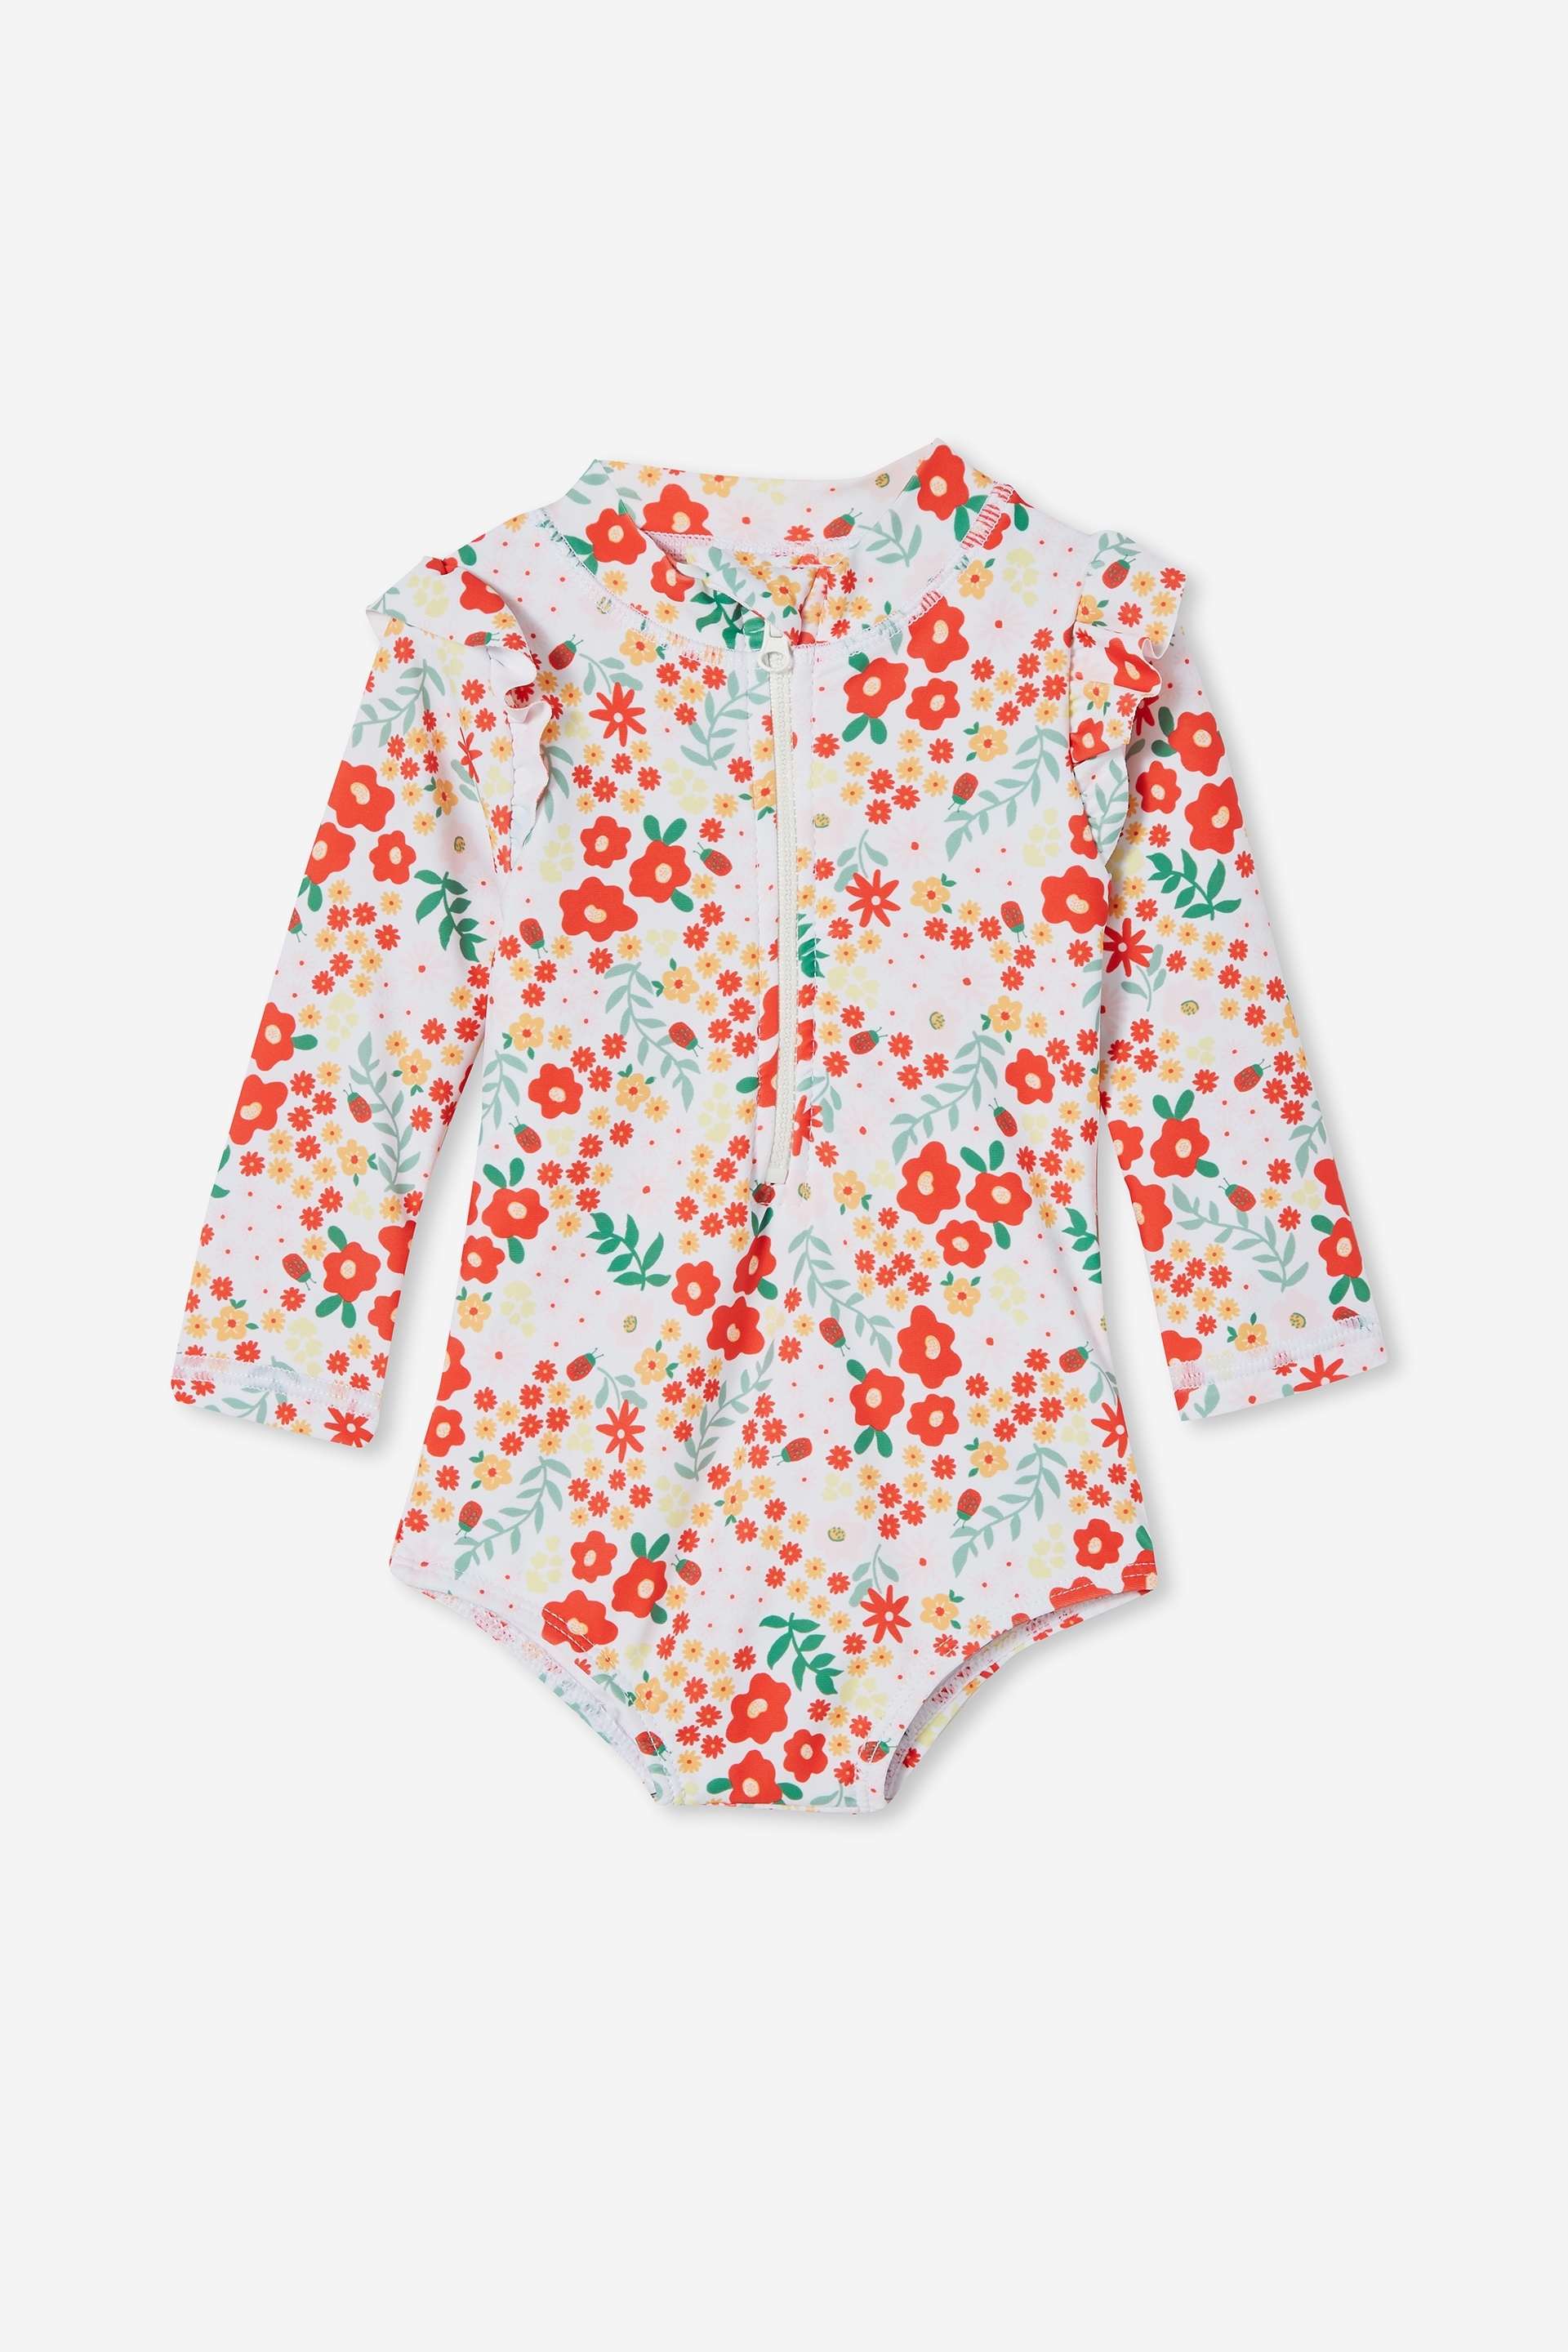 Cotton On Kids - Nicky Long Sleeve Ruffle Swimsuit - Vanilla/red orange lulu floral